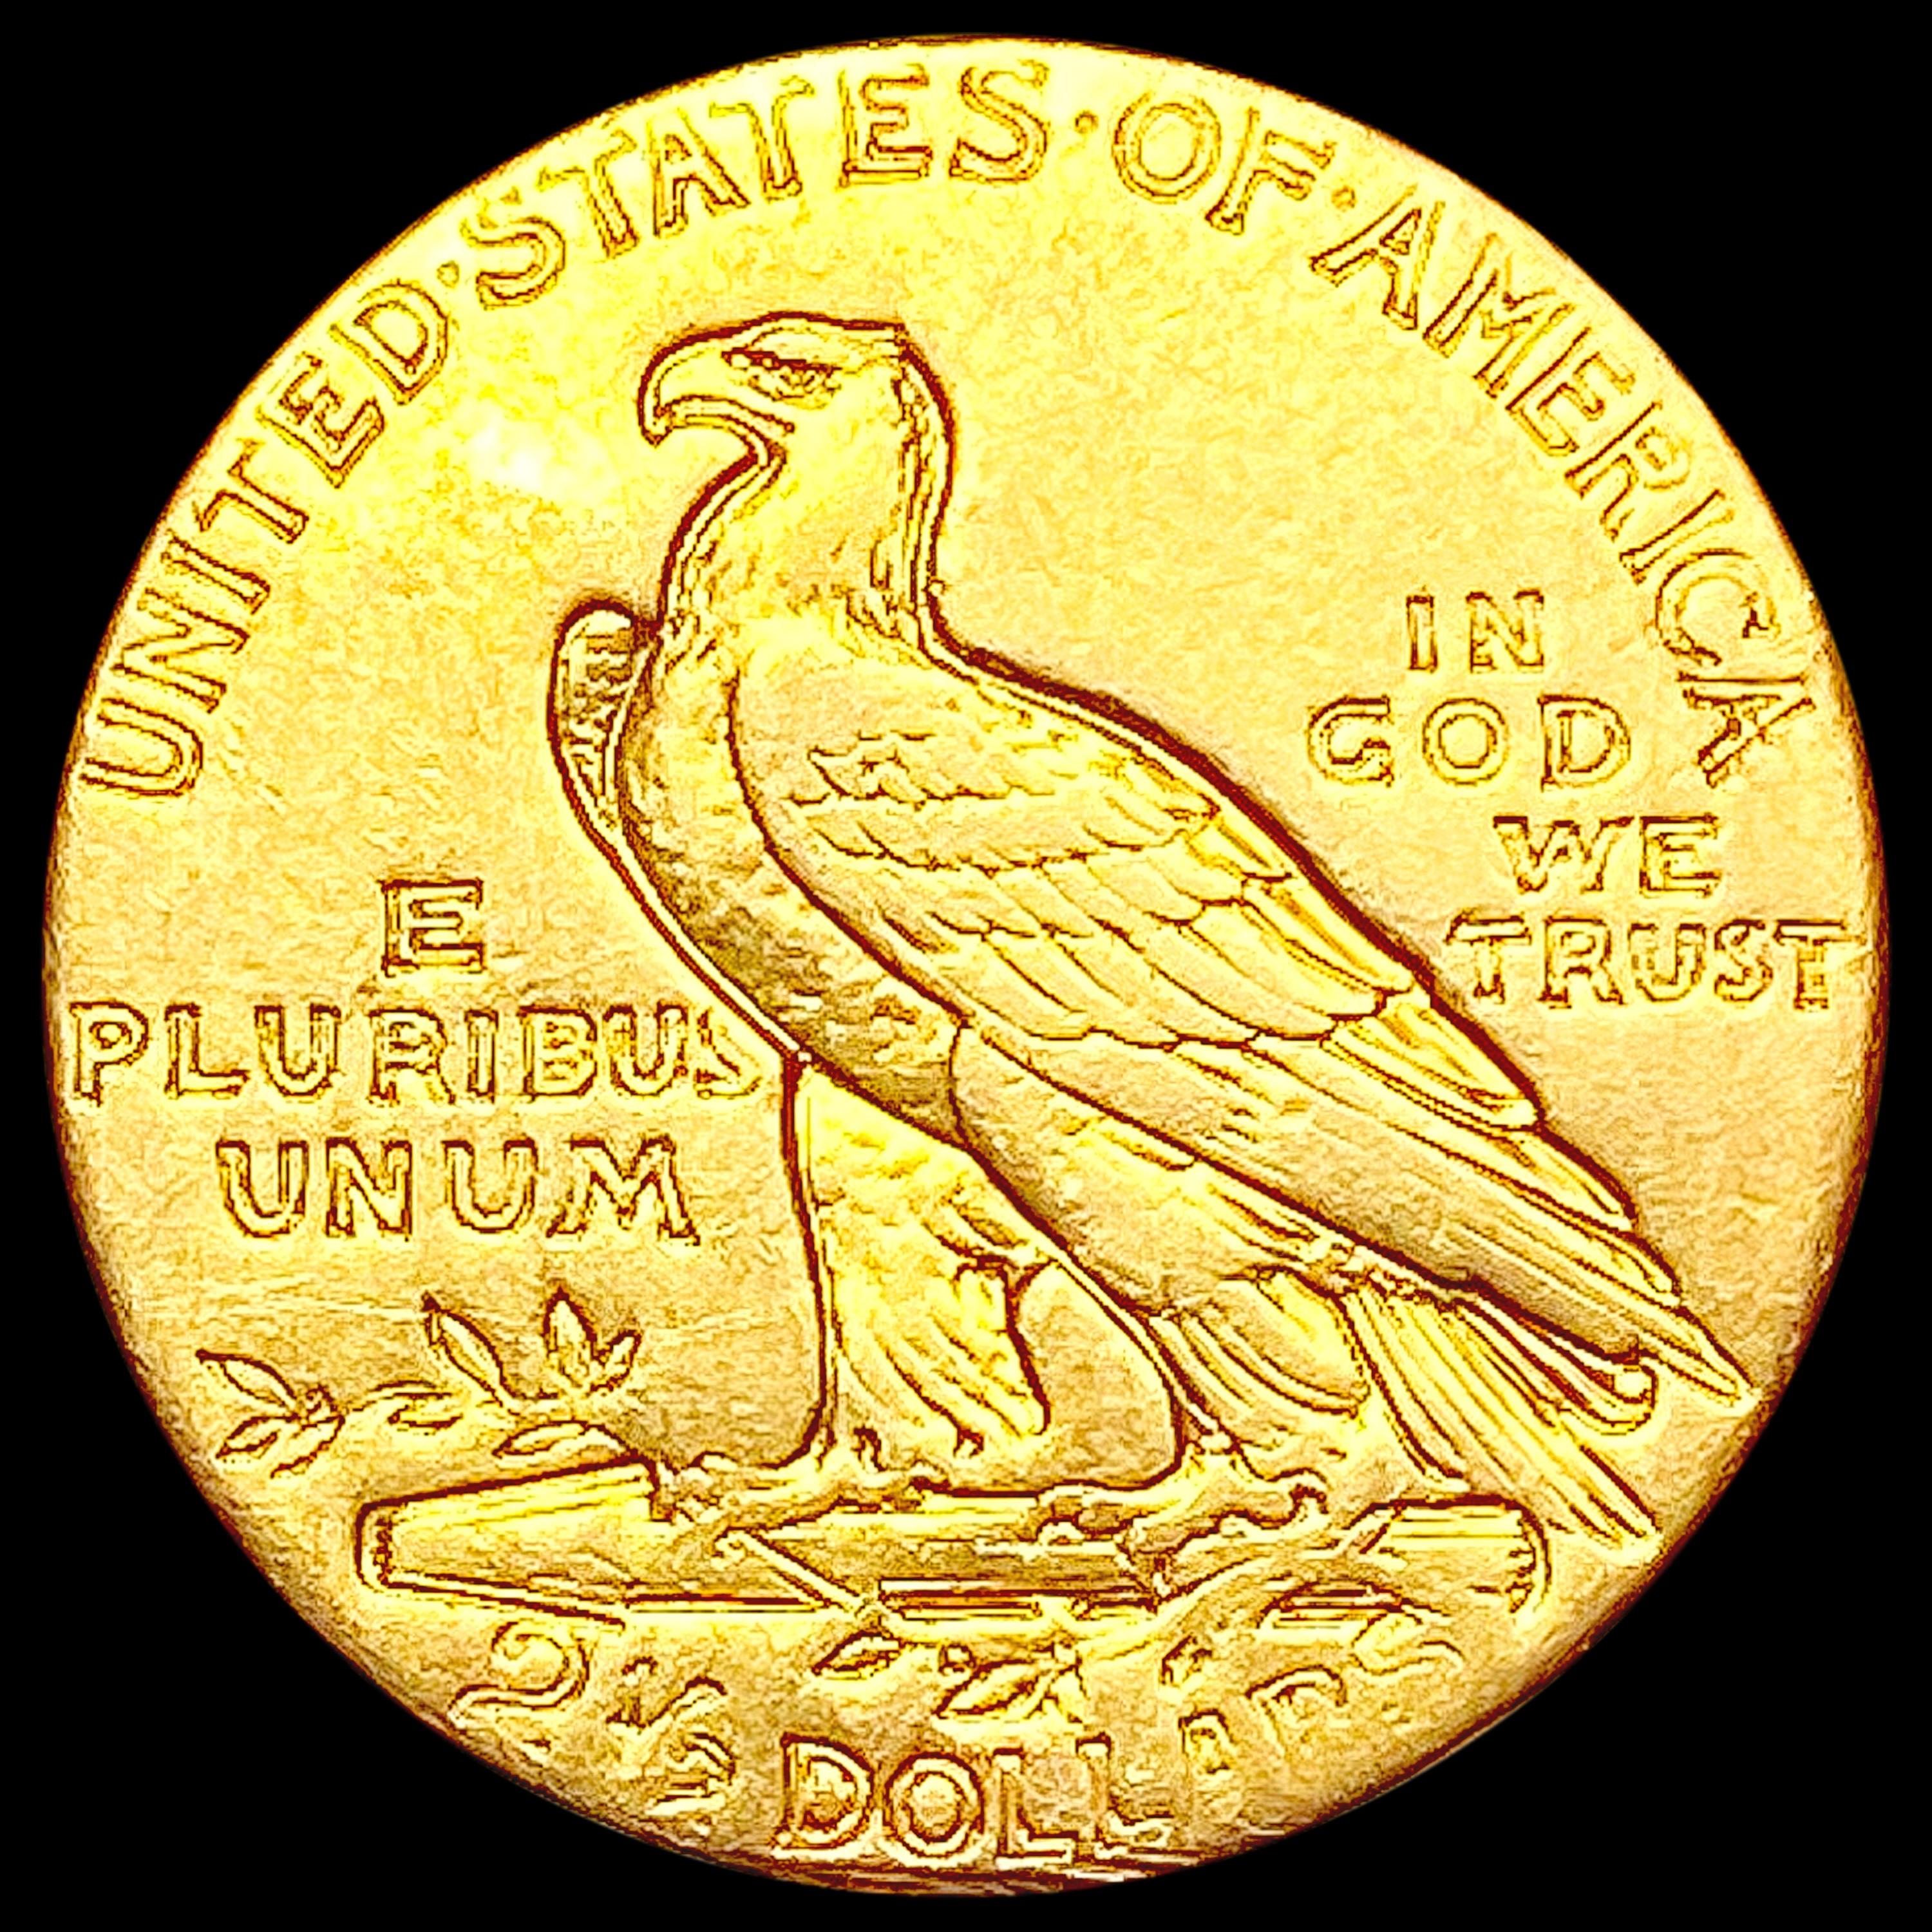 1909 $2.50 Gold Quarter Eagle LIGHTLY CIRCULATED